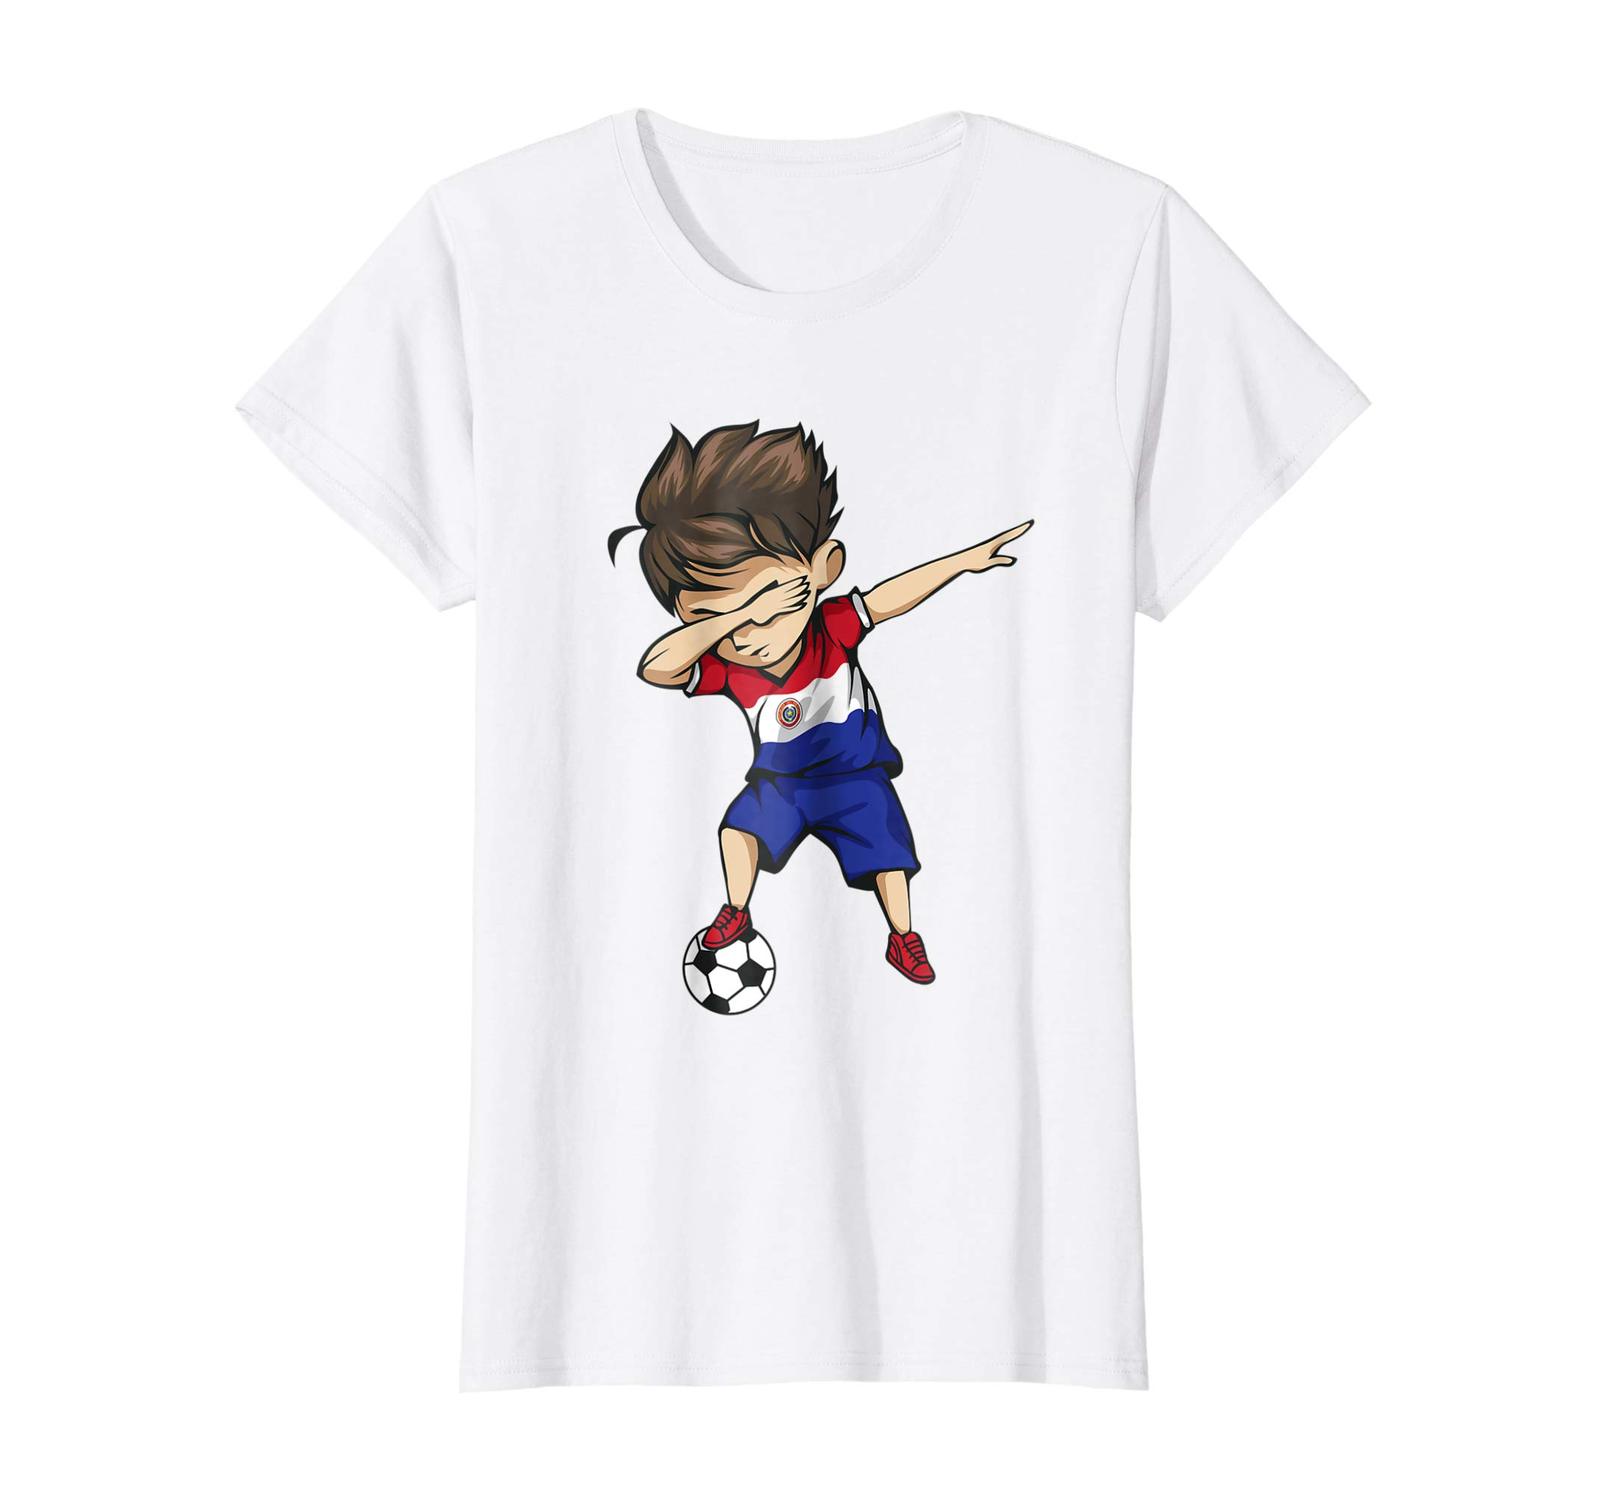 Sport Shirts - Dabbing Soccer Boy Paraguay Jersey Shirt - Paraguay Football Wowe - $19.95 - $23.95